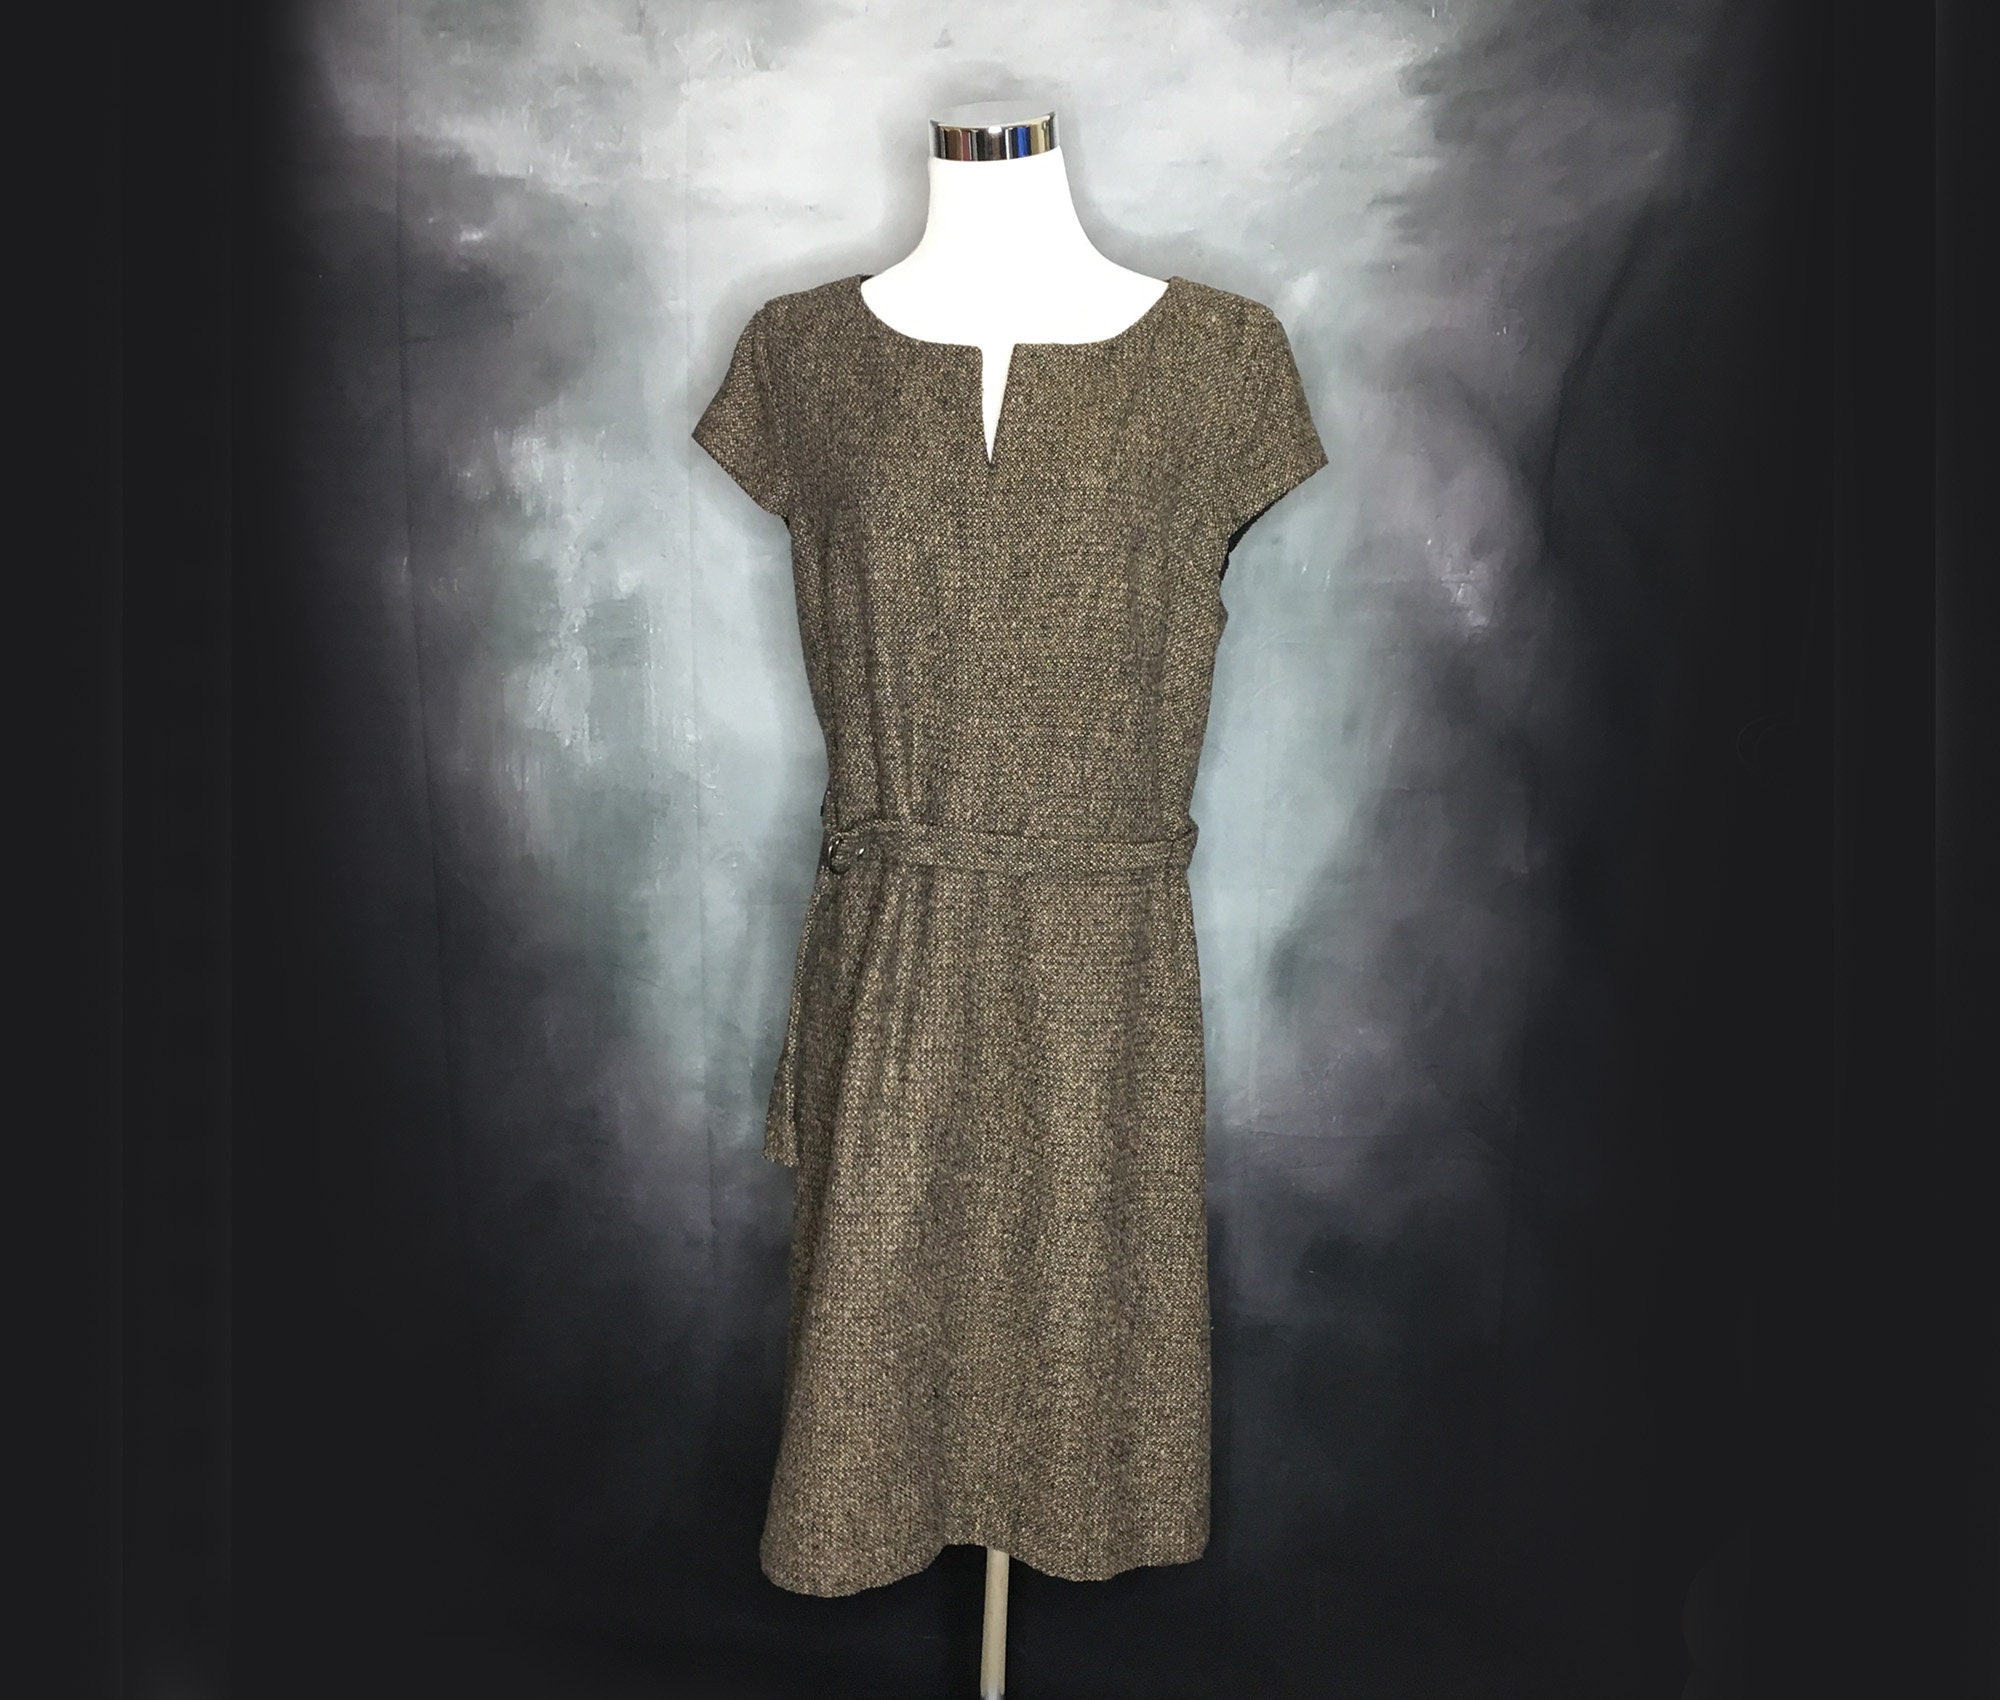 Vintage Talbot's Wool Blend Dress, Brown Tweed, Cap Sleeves, Notched Neckline, Belted, 80's, Large